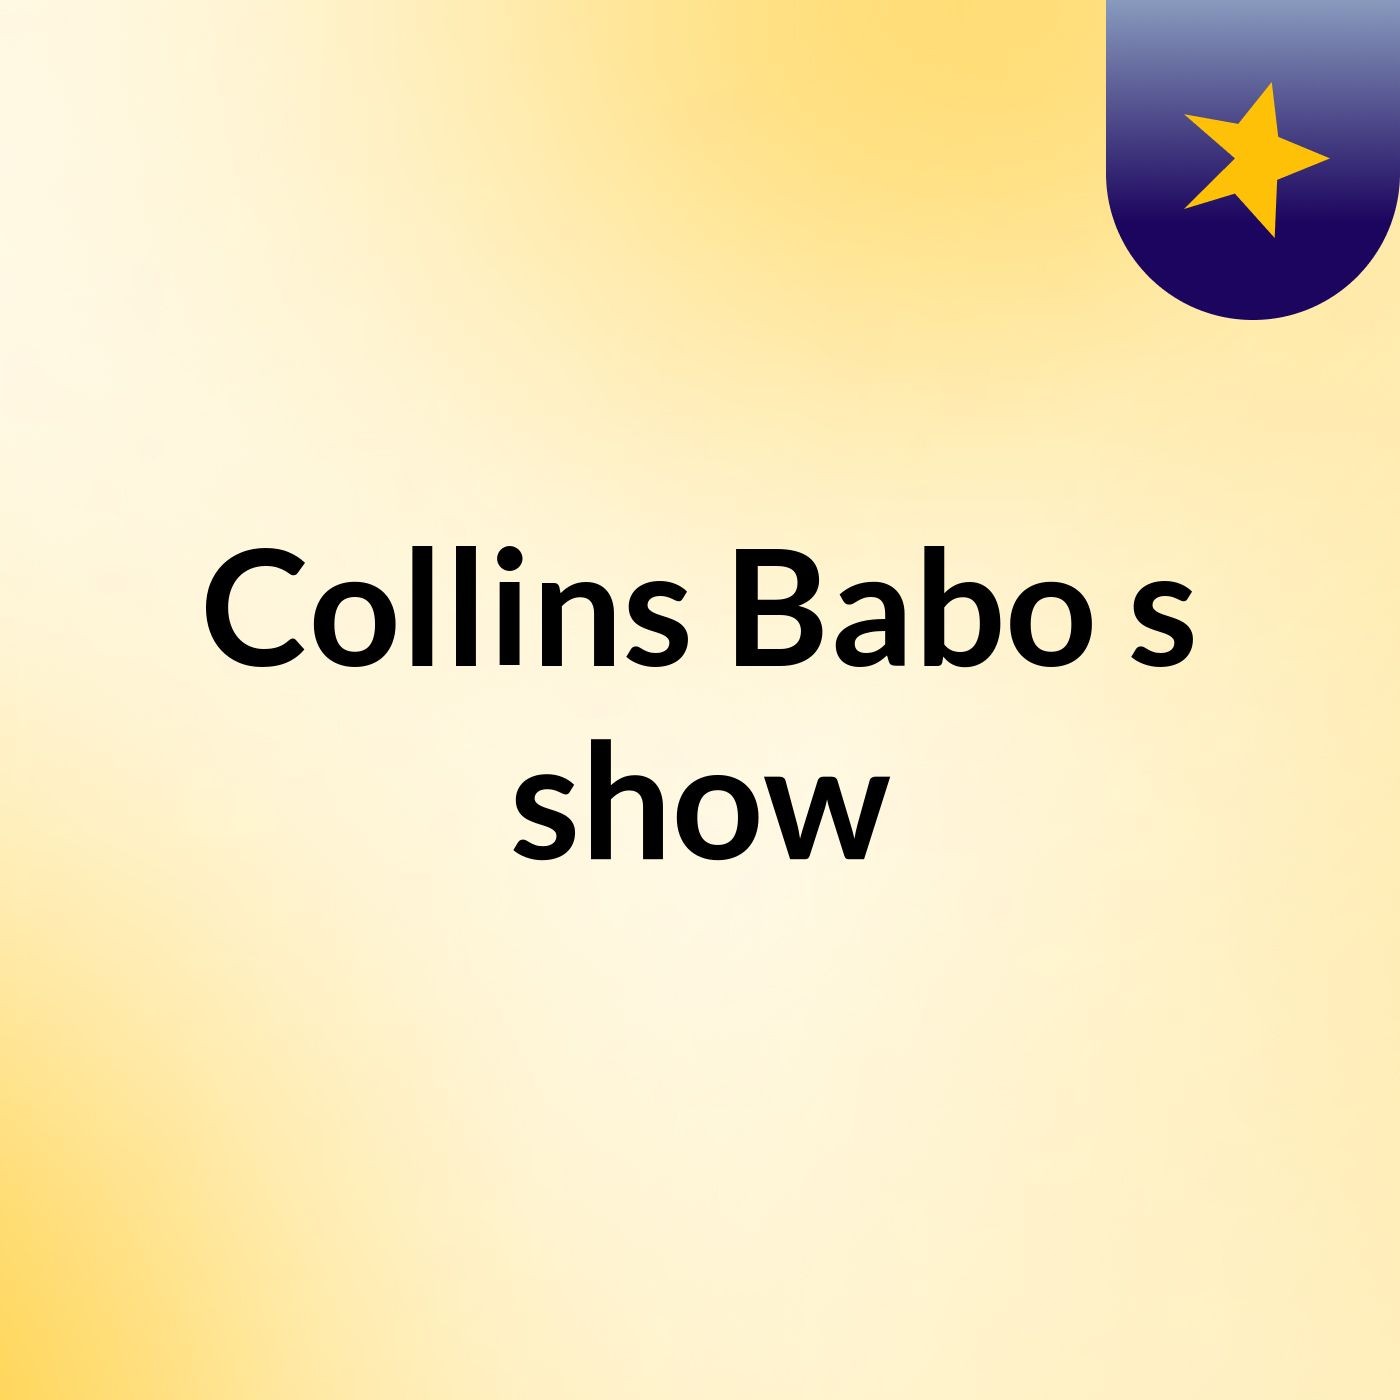 Collins Babo's show